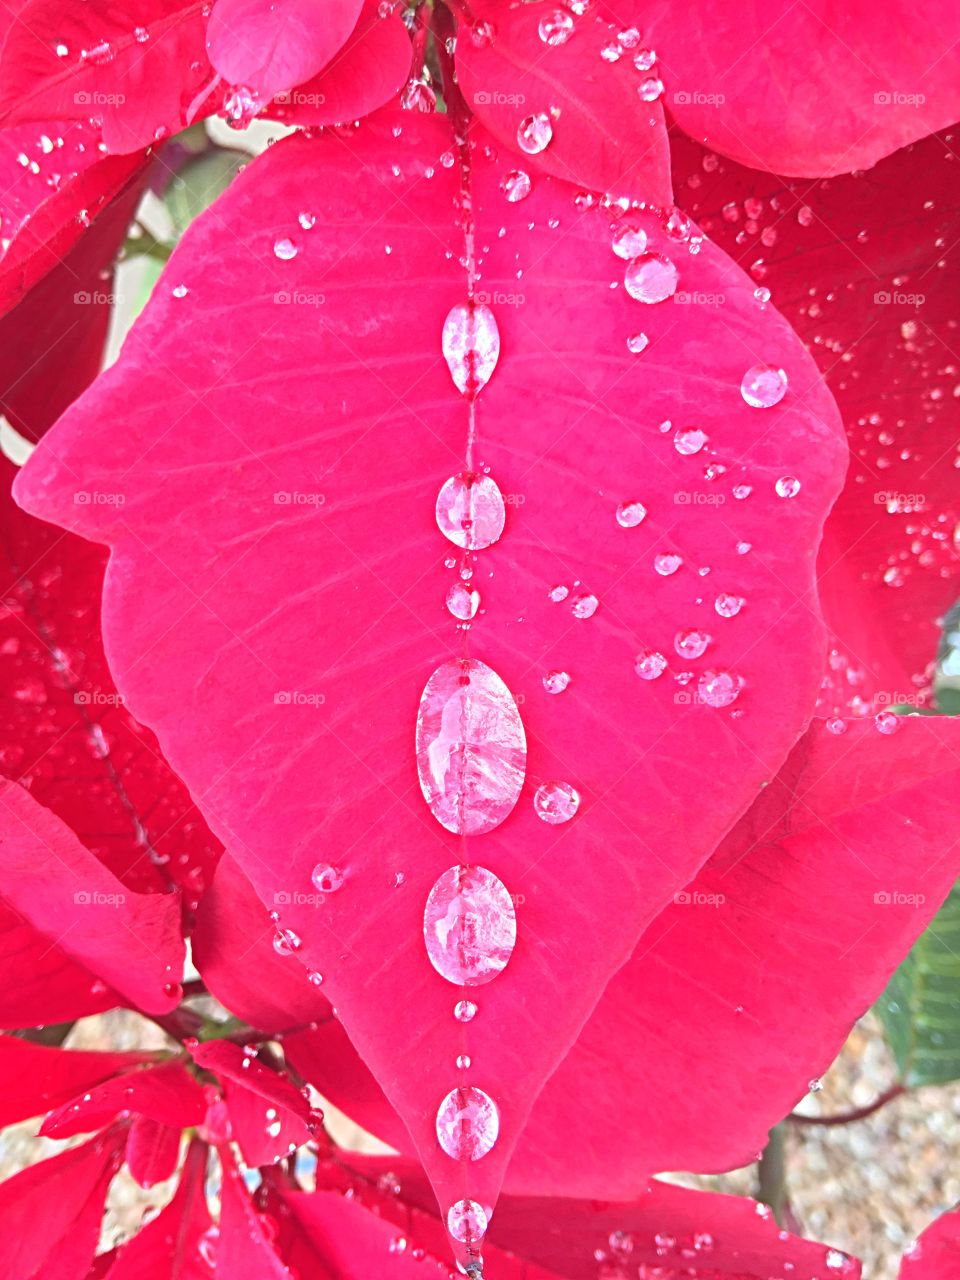 Poinsettia leaf with raindrops.